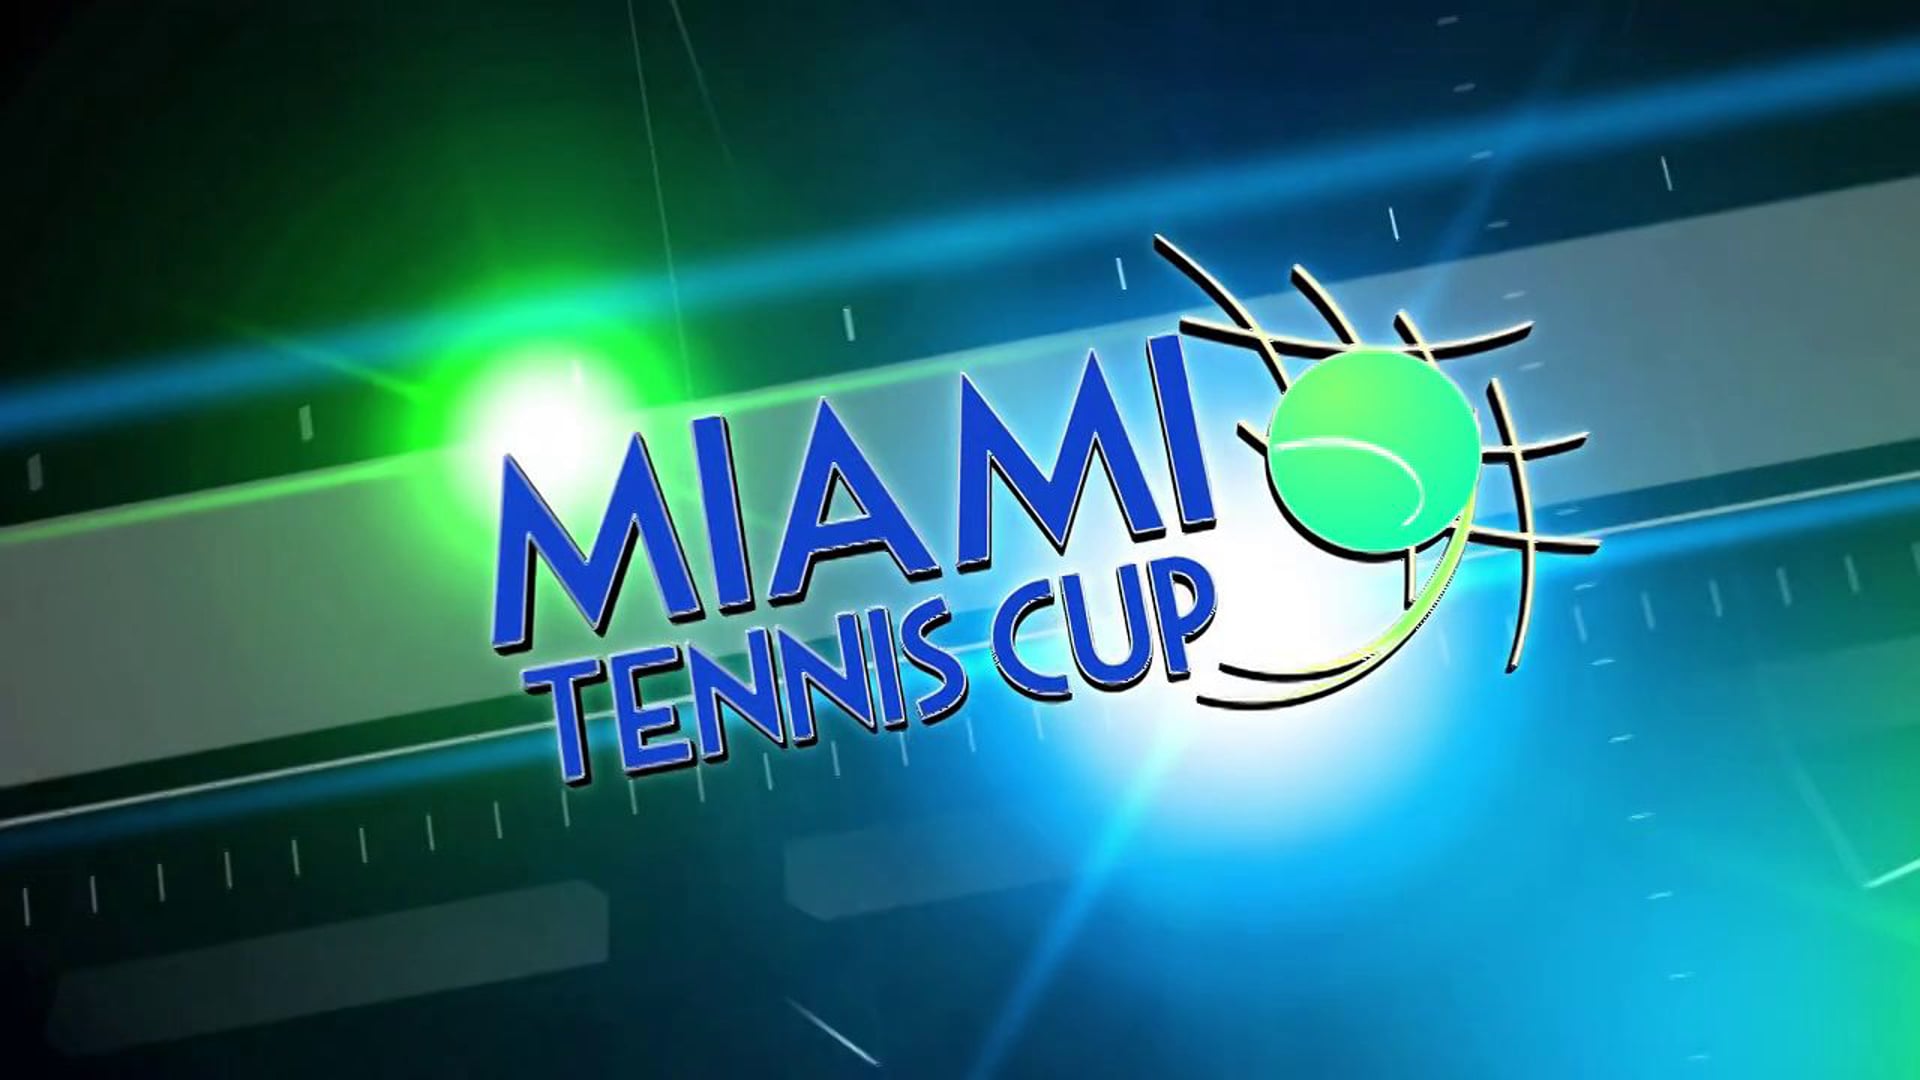 Miami Tennis Cup 2012 - Short Promo